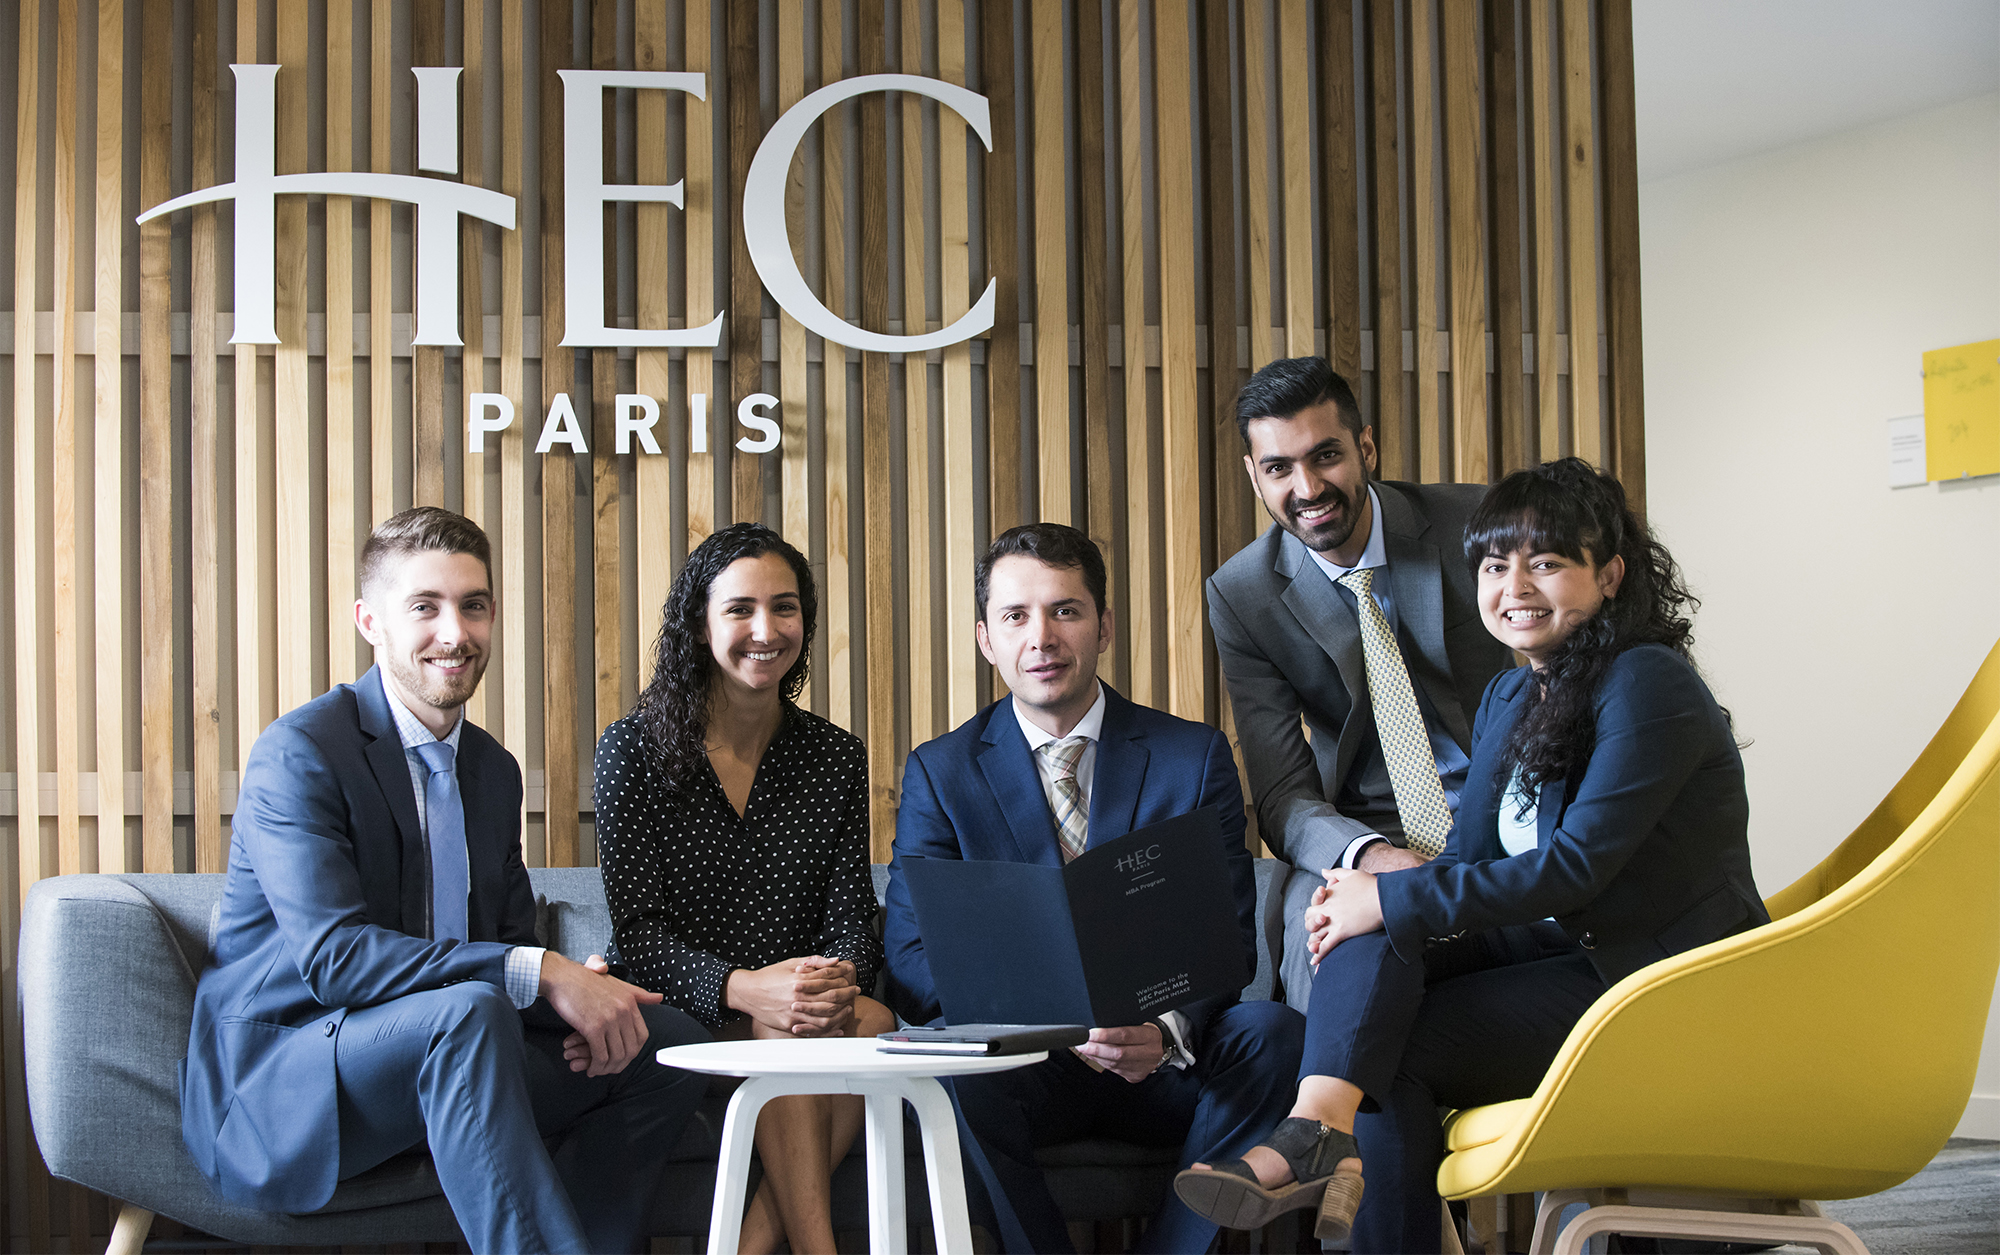 The Career Center at HEC Paris